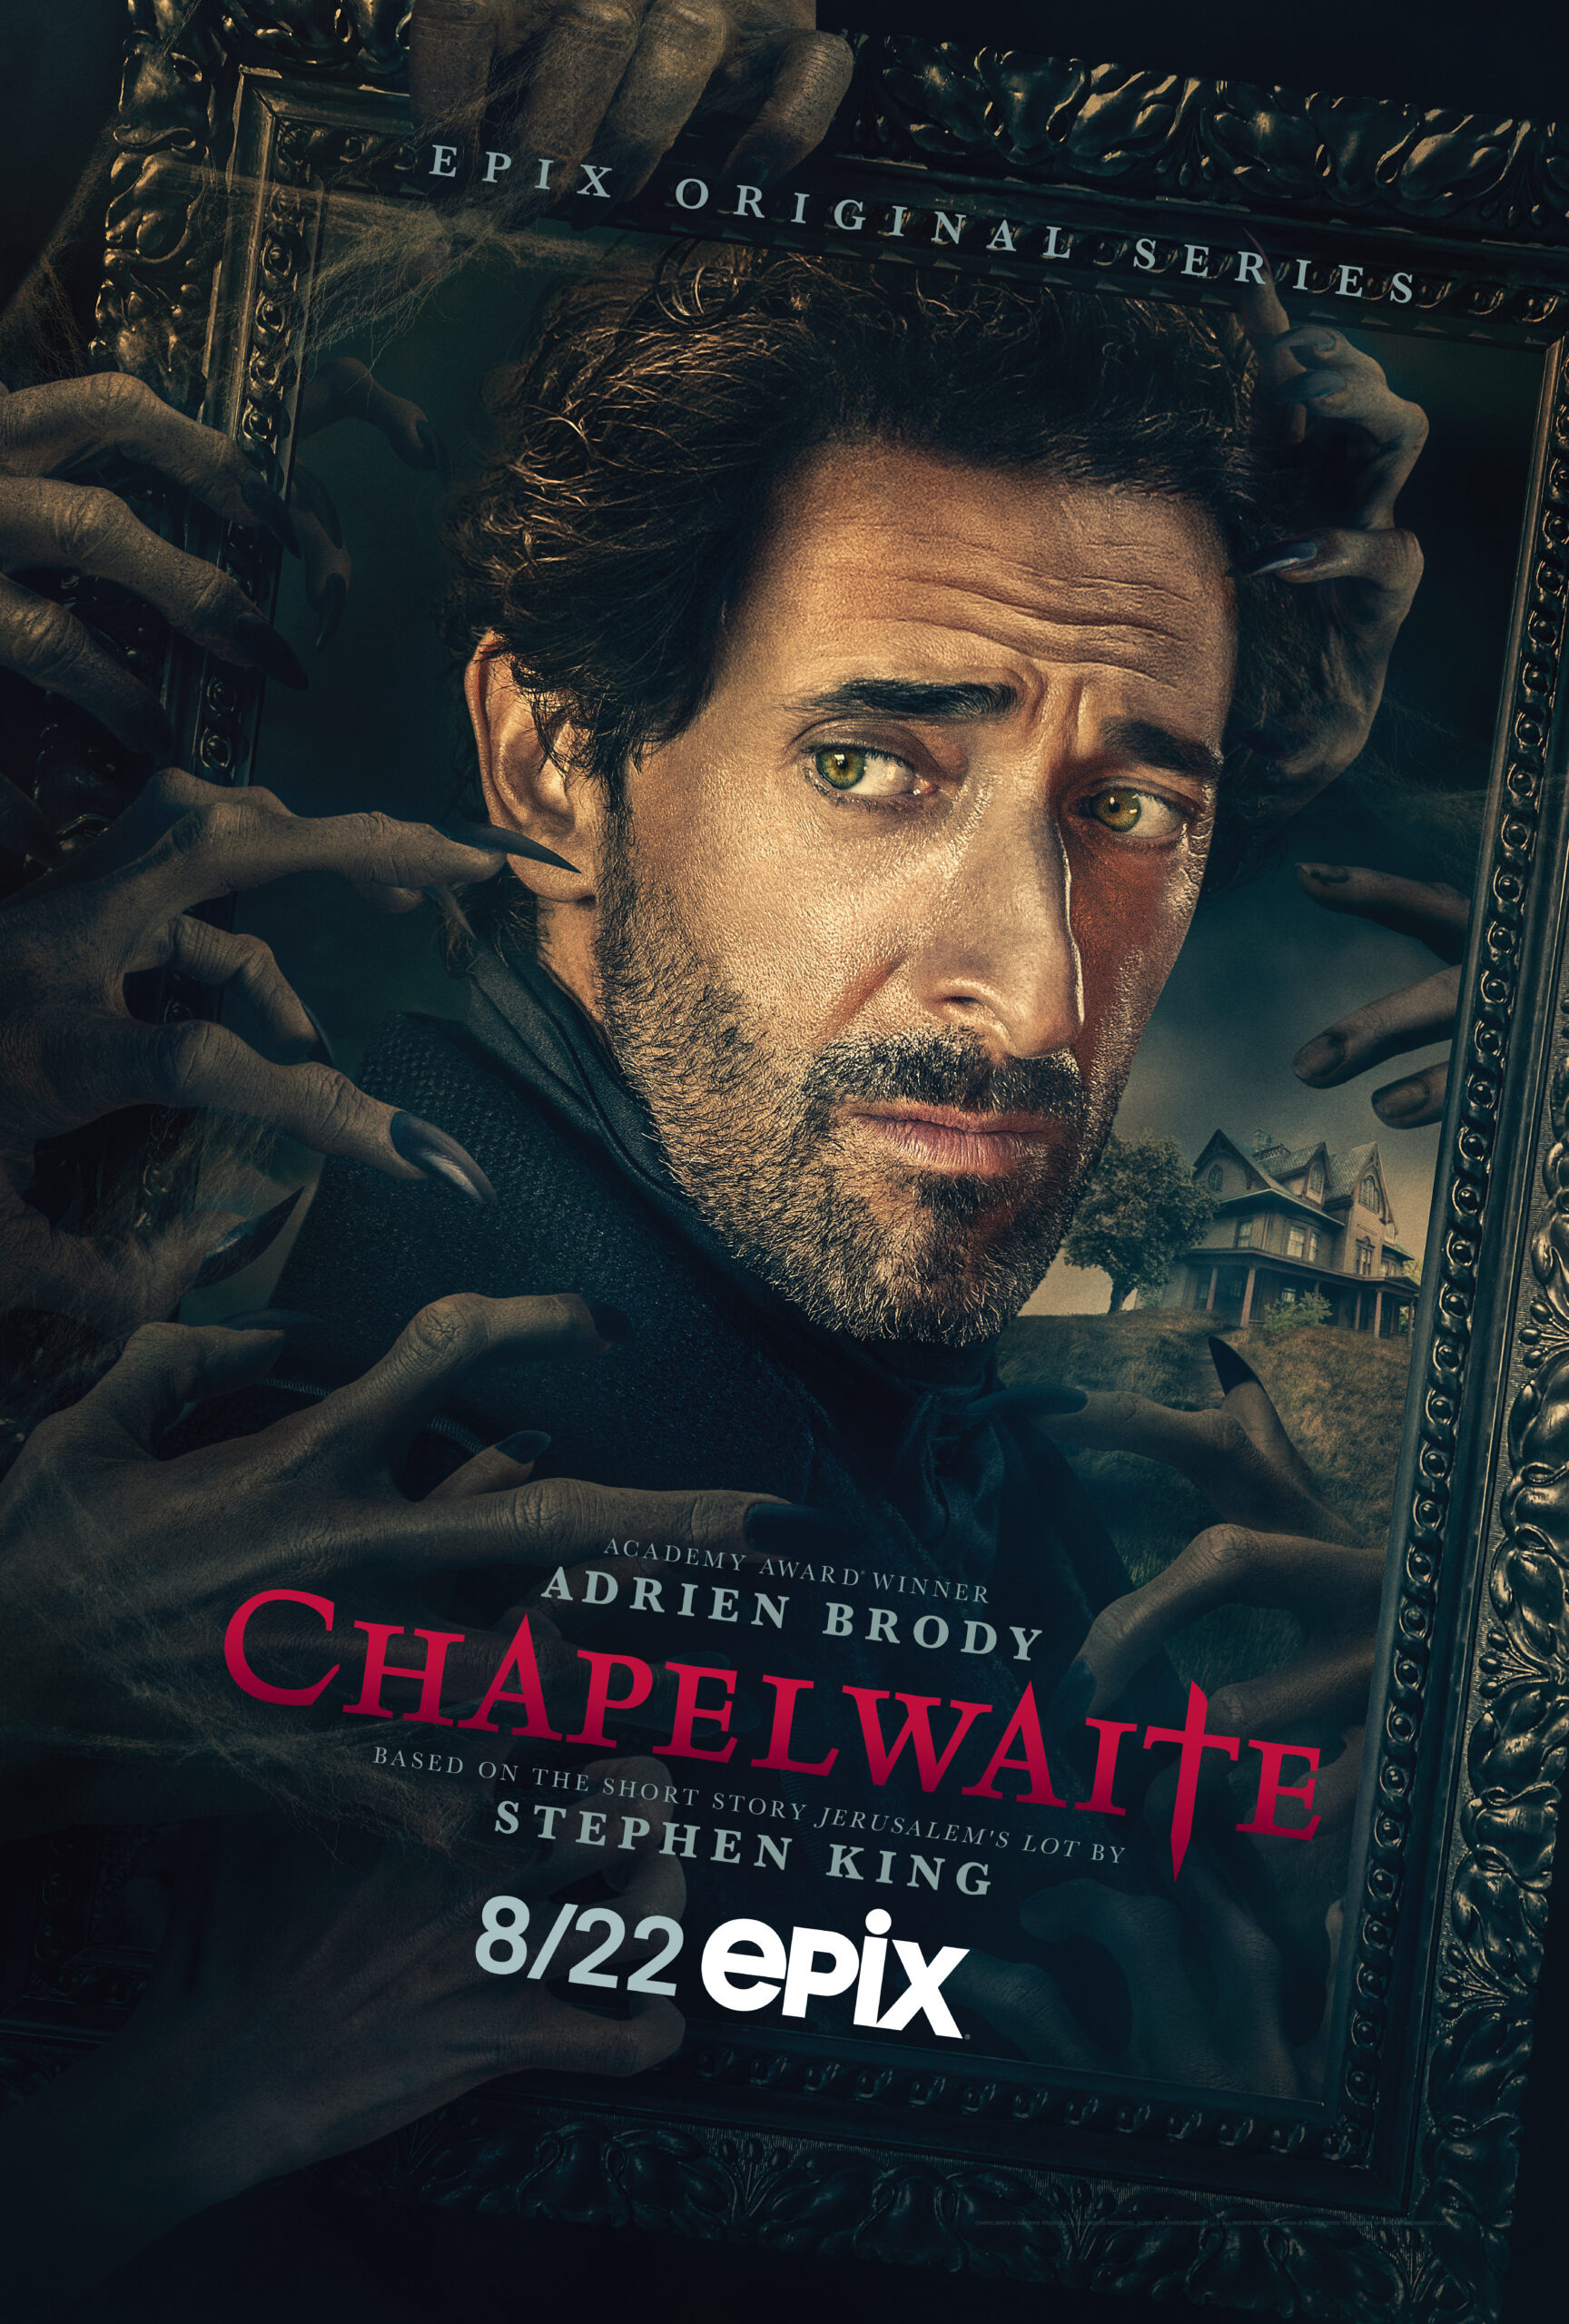 Mega Sized TV Poster Image for Chapelwaite 